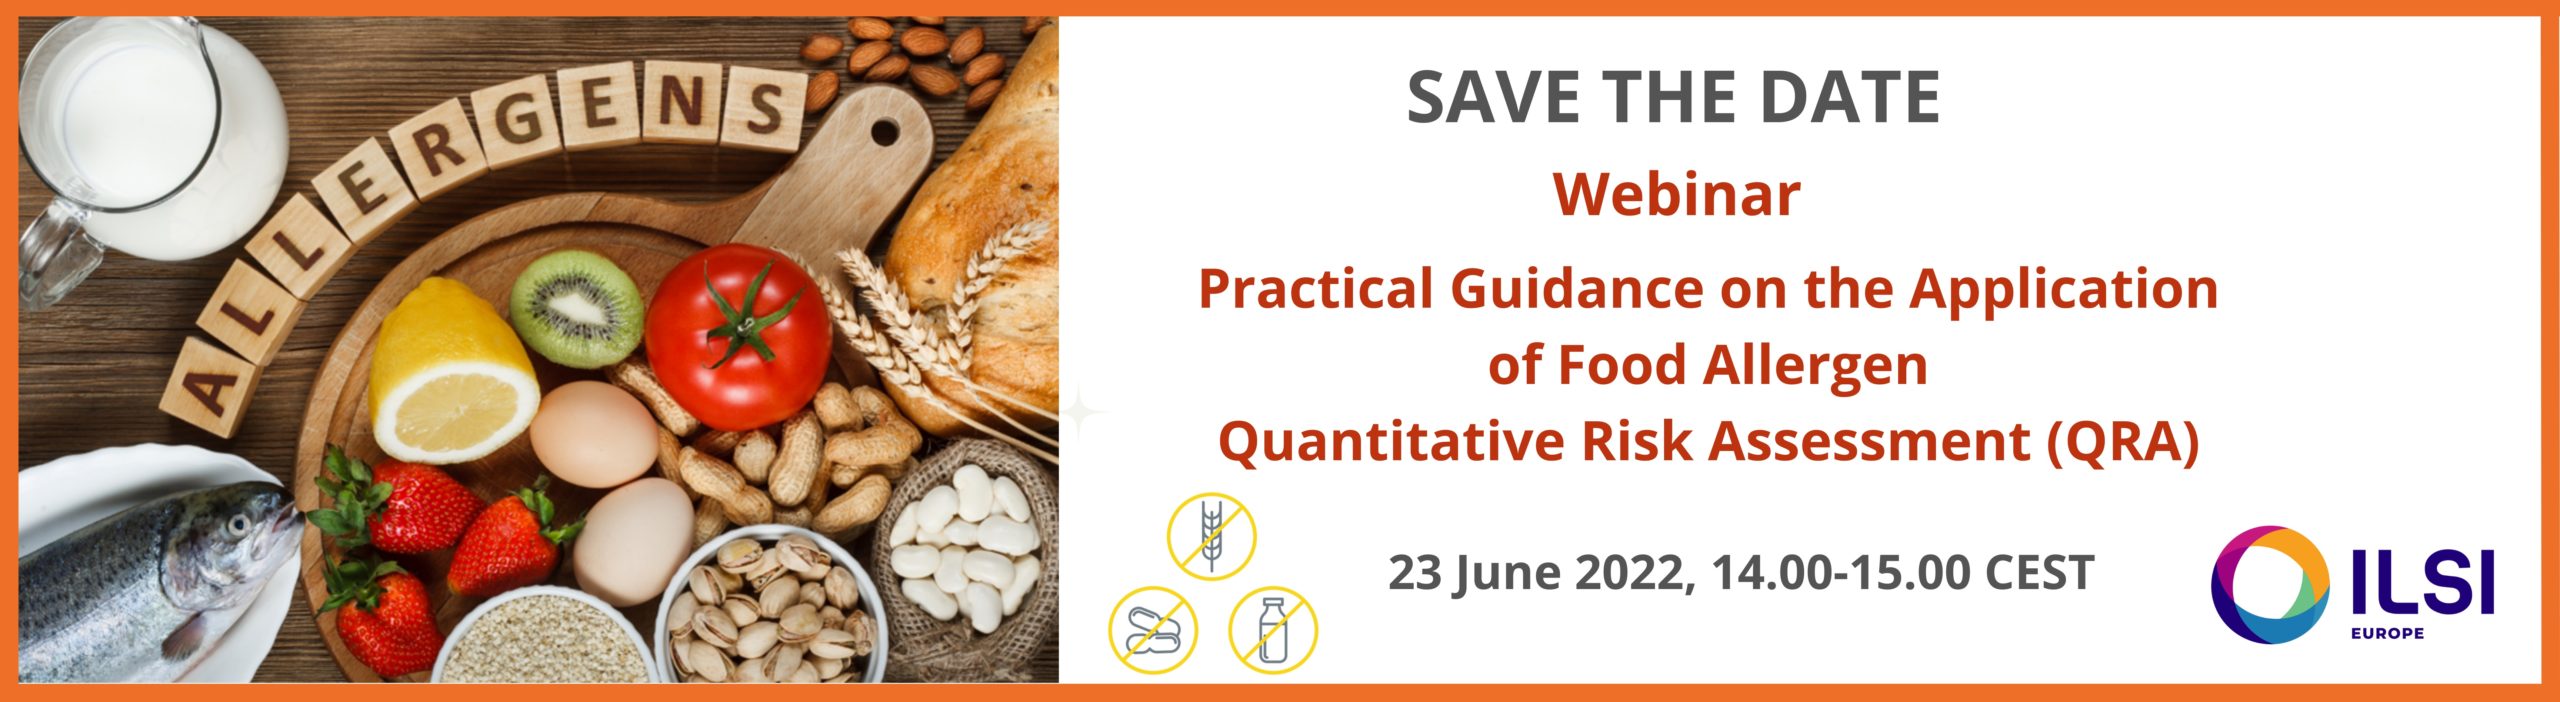 Webinar Food Allergen Quantitative Risk Assessment 4-6 May 2022 Munich, Germany